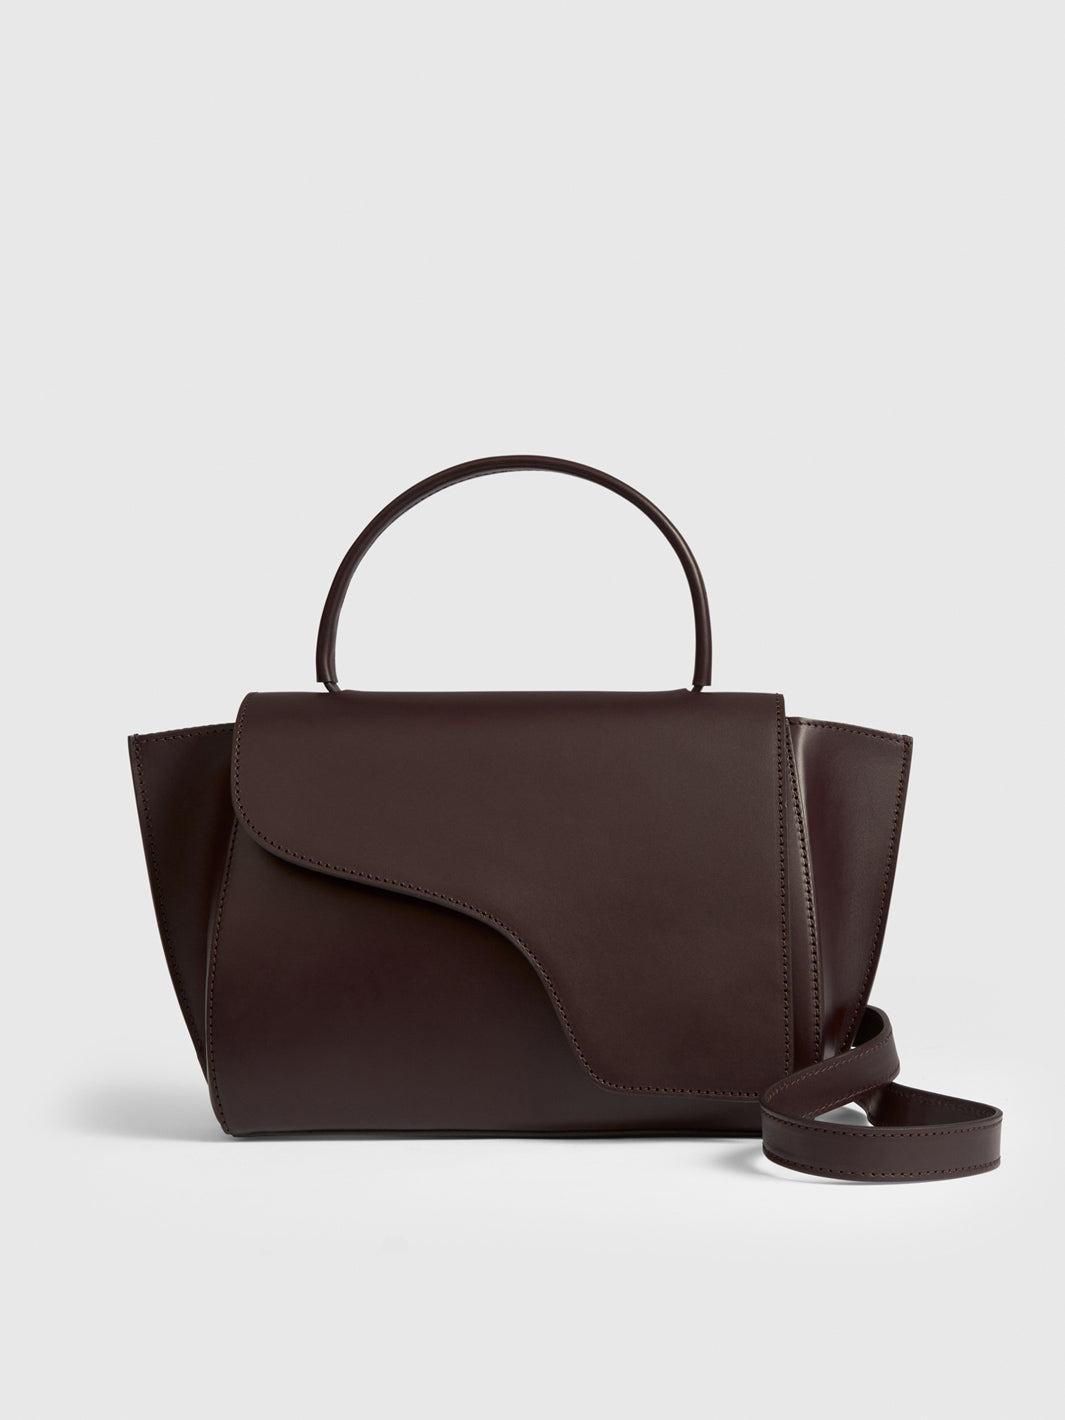 Arezzo Walnut Leather Handbag